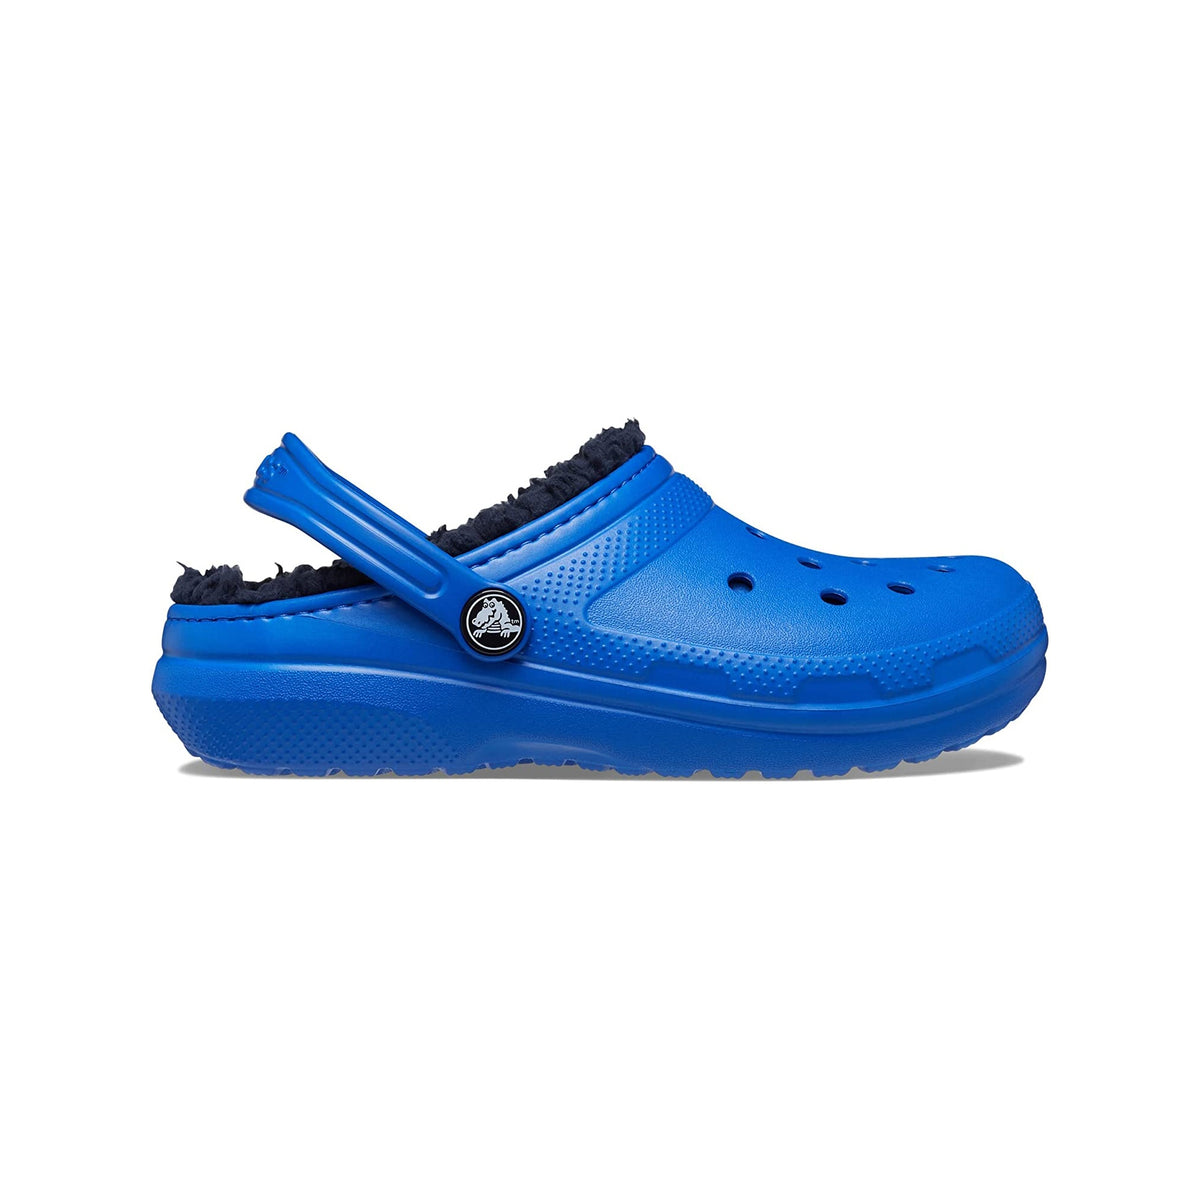 Crocs Clogs & Sandals - Shop Online - Allgoods